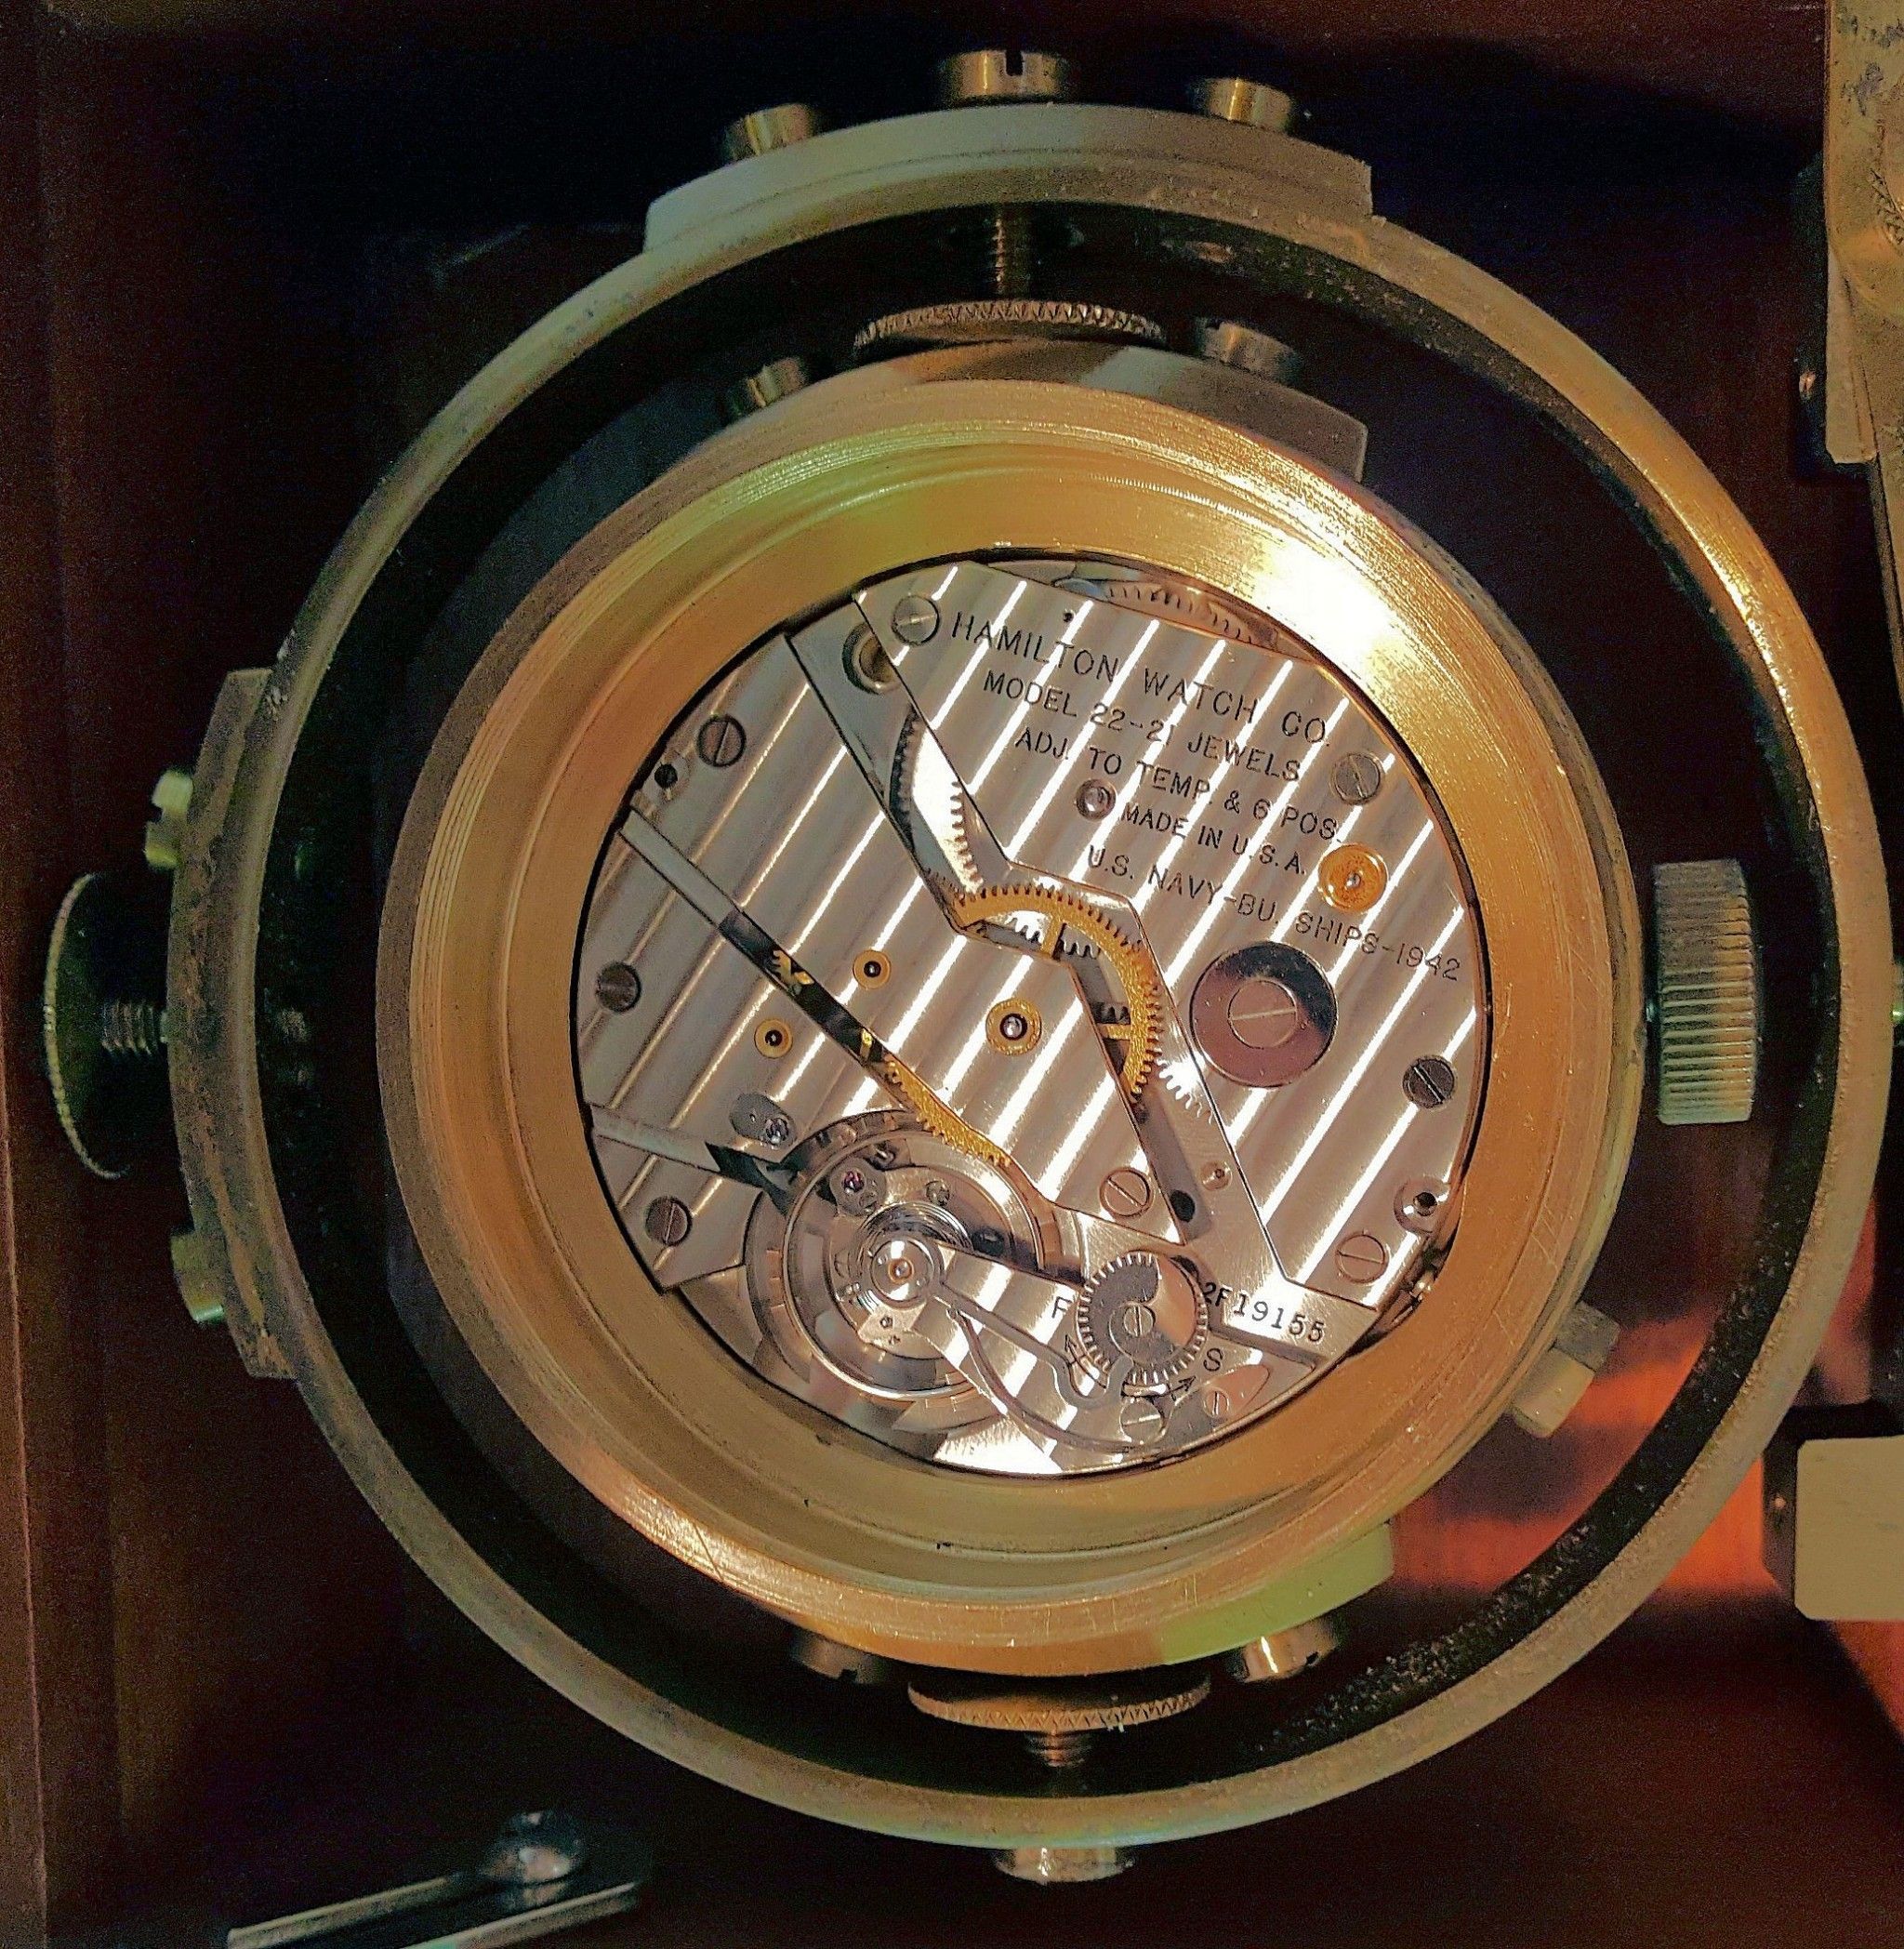 Movement of this Hamilton M 22 deck clock image